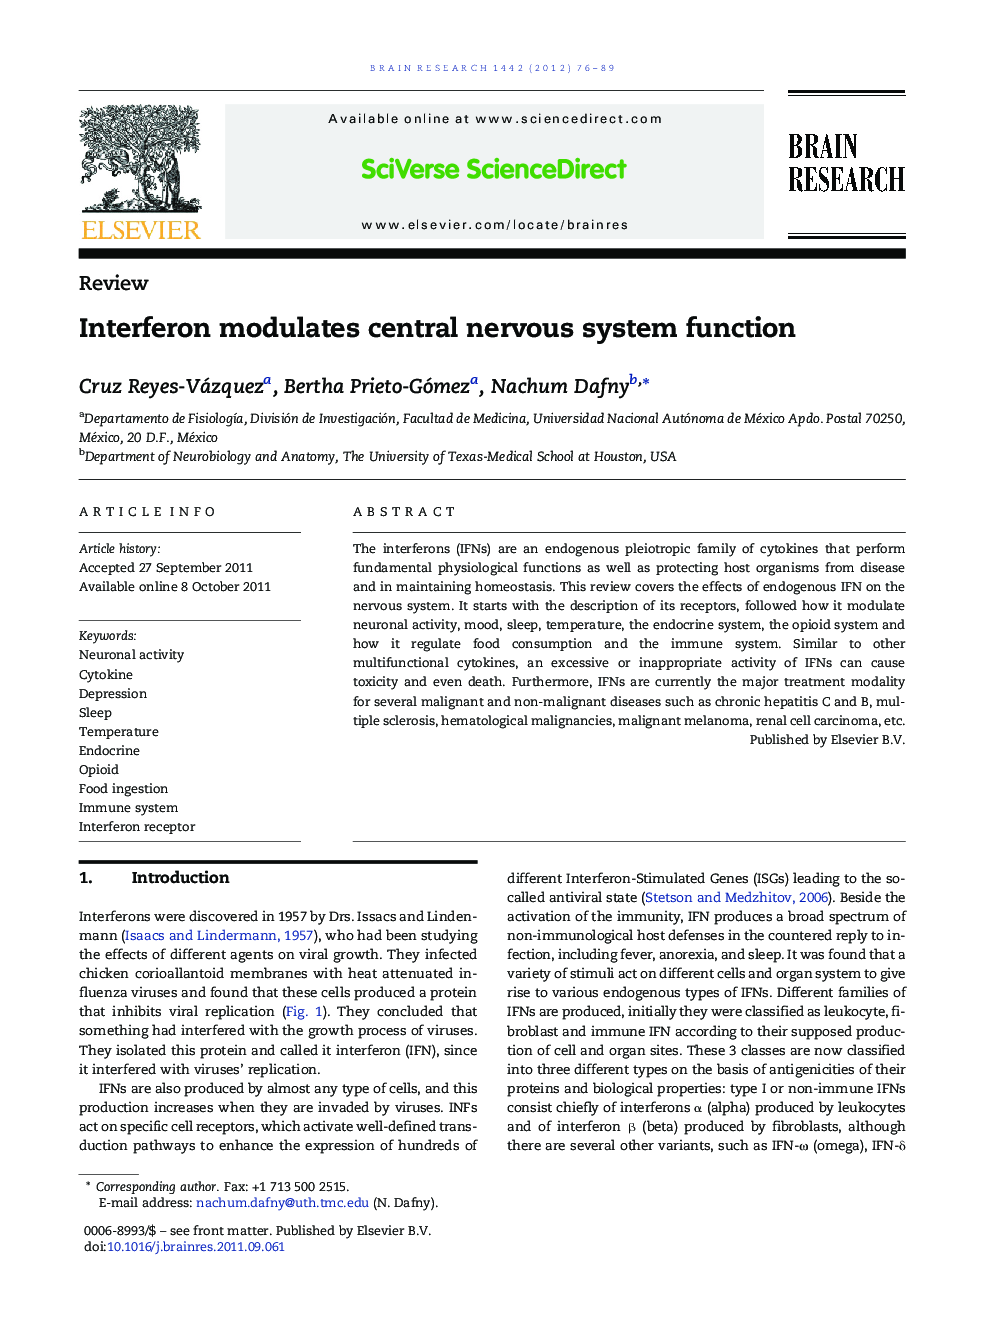 Interferon modulates central nervous system function